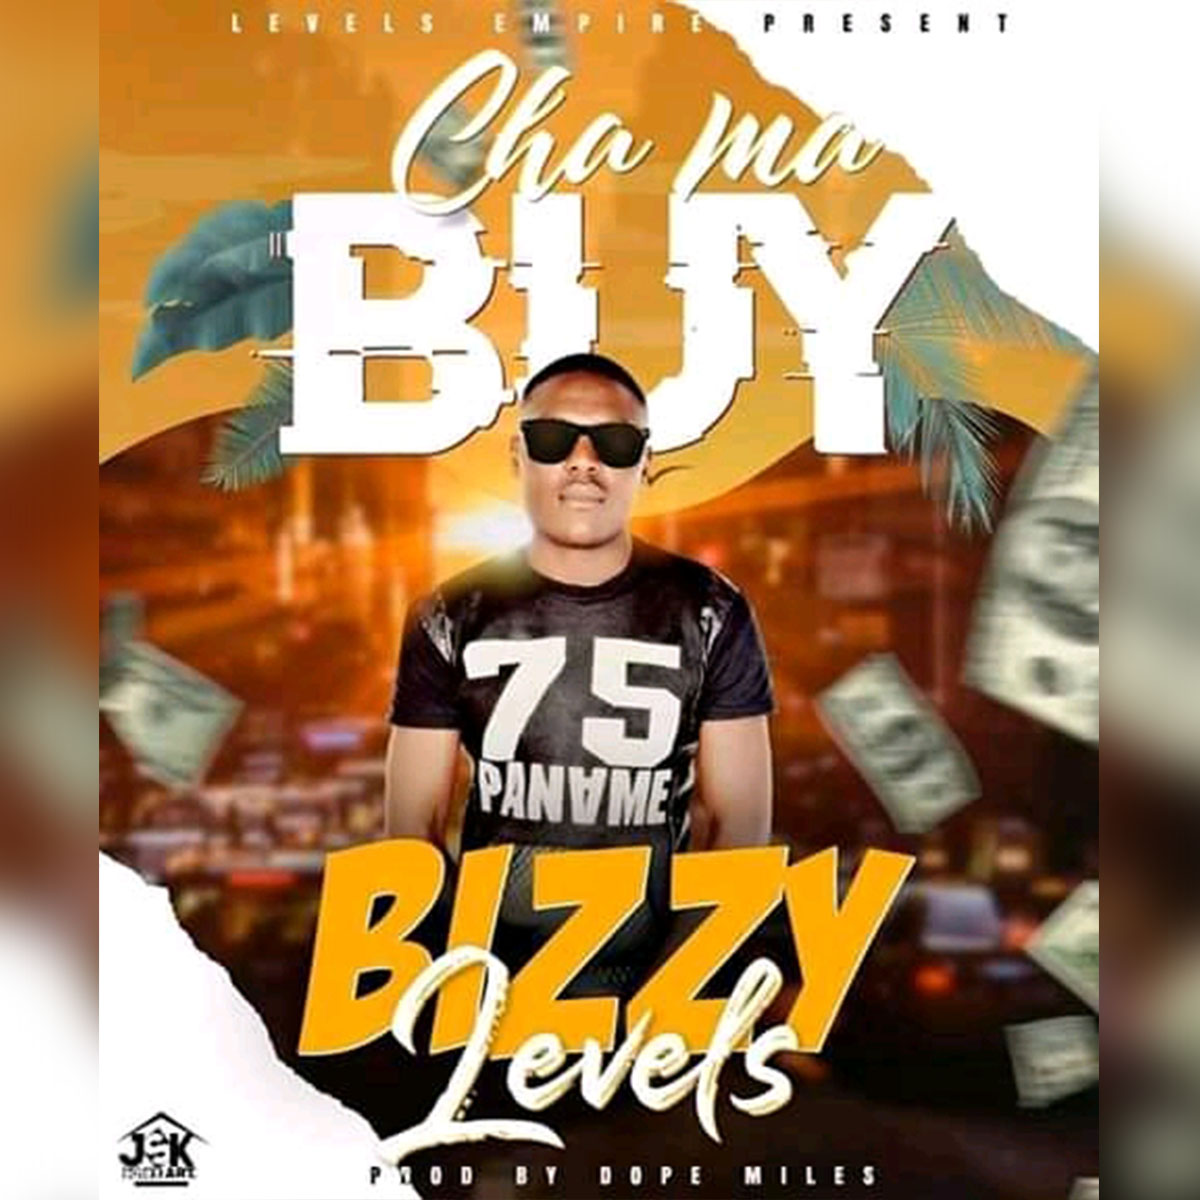 Bizzy Levels - Cha Ma Big Buyer